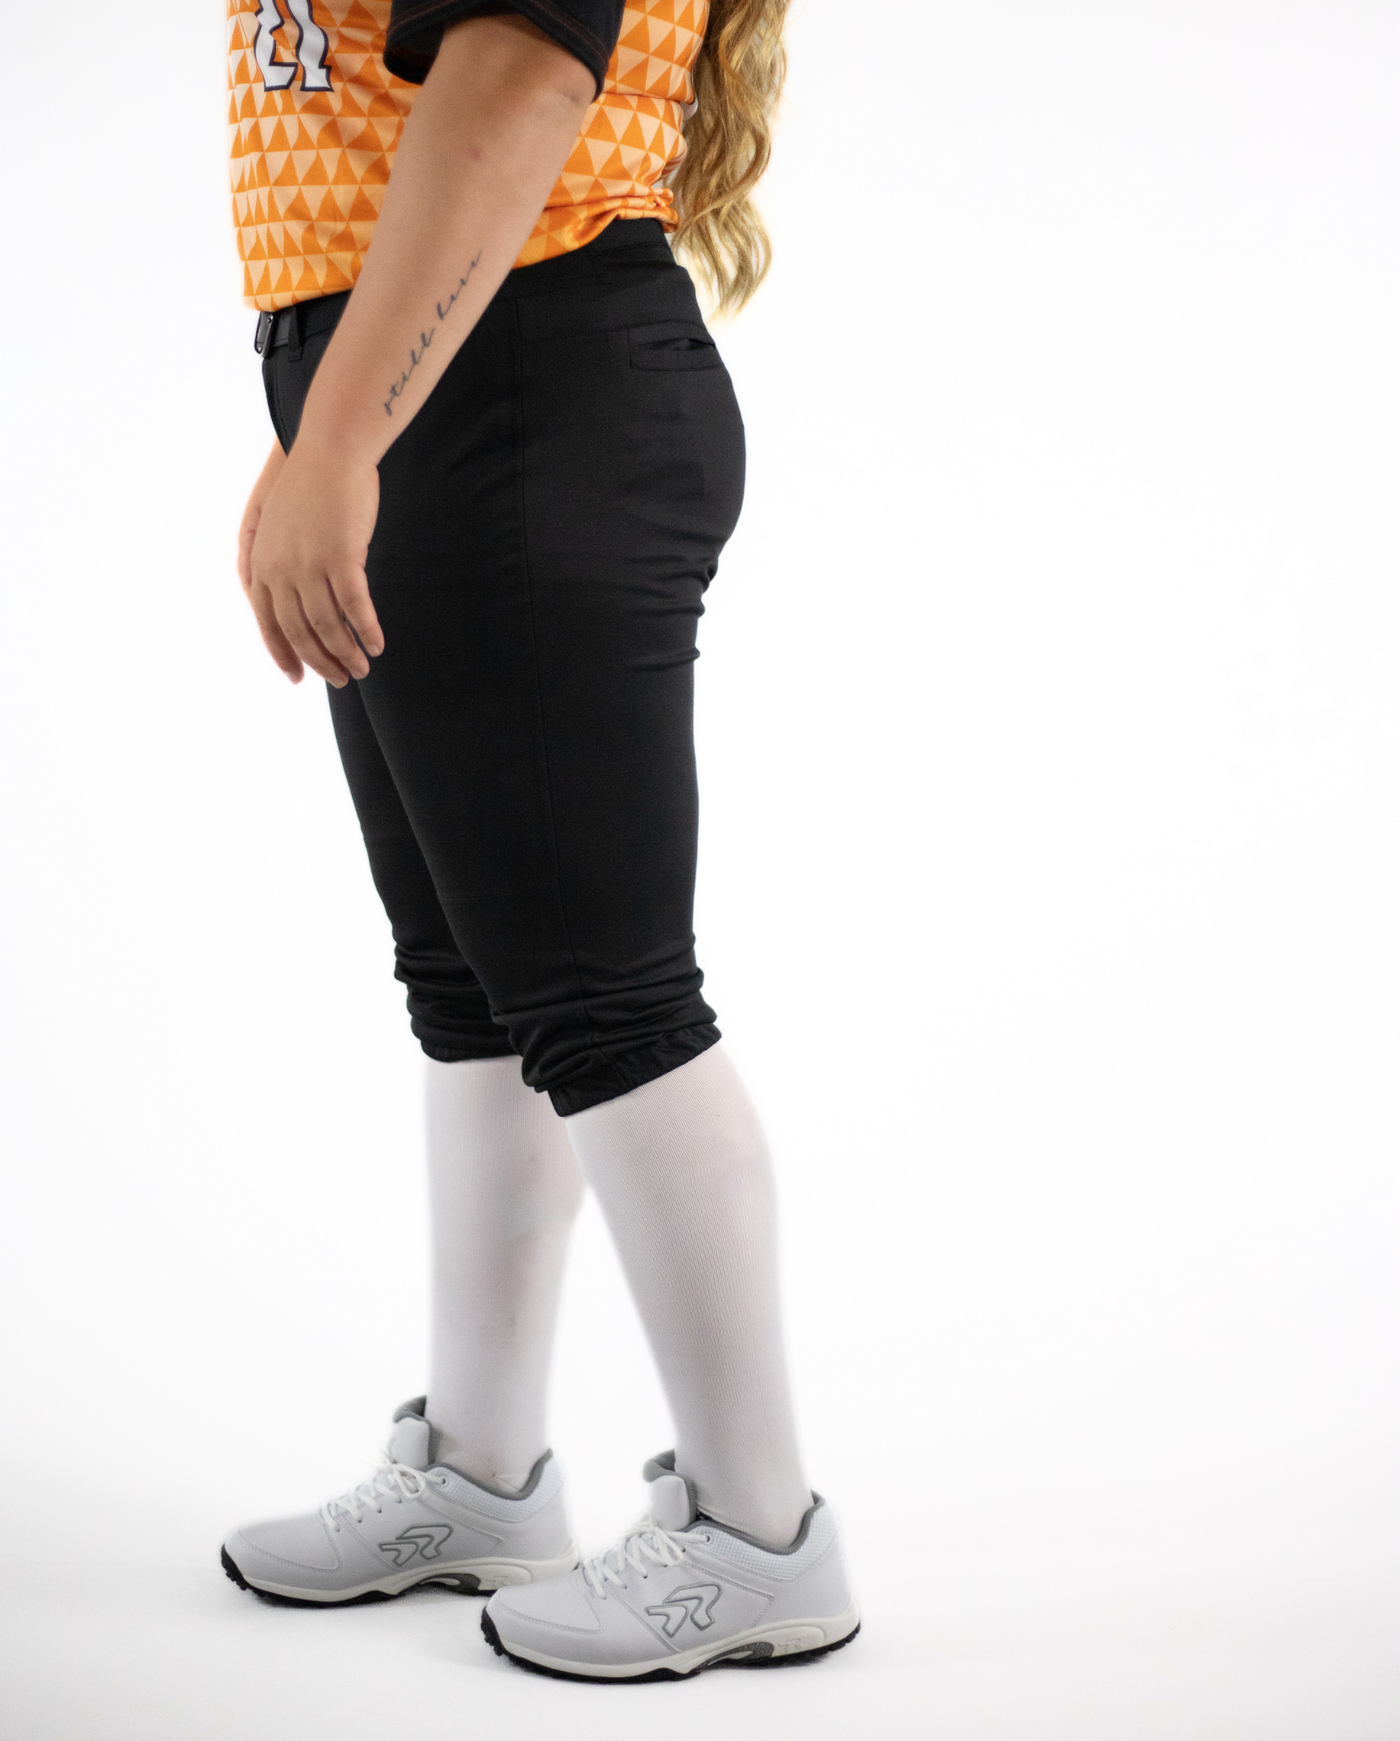 Women's Revolution Softball Pants - Curvy Fit